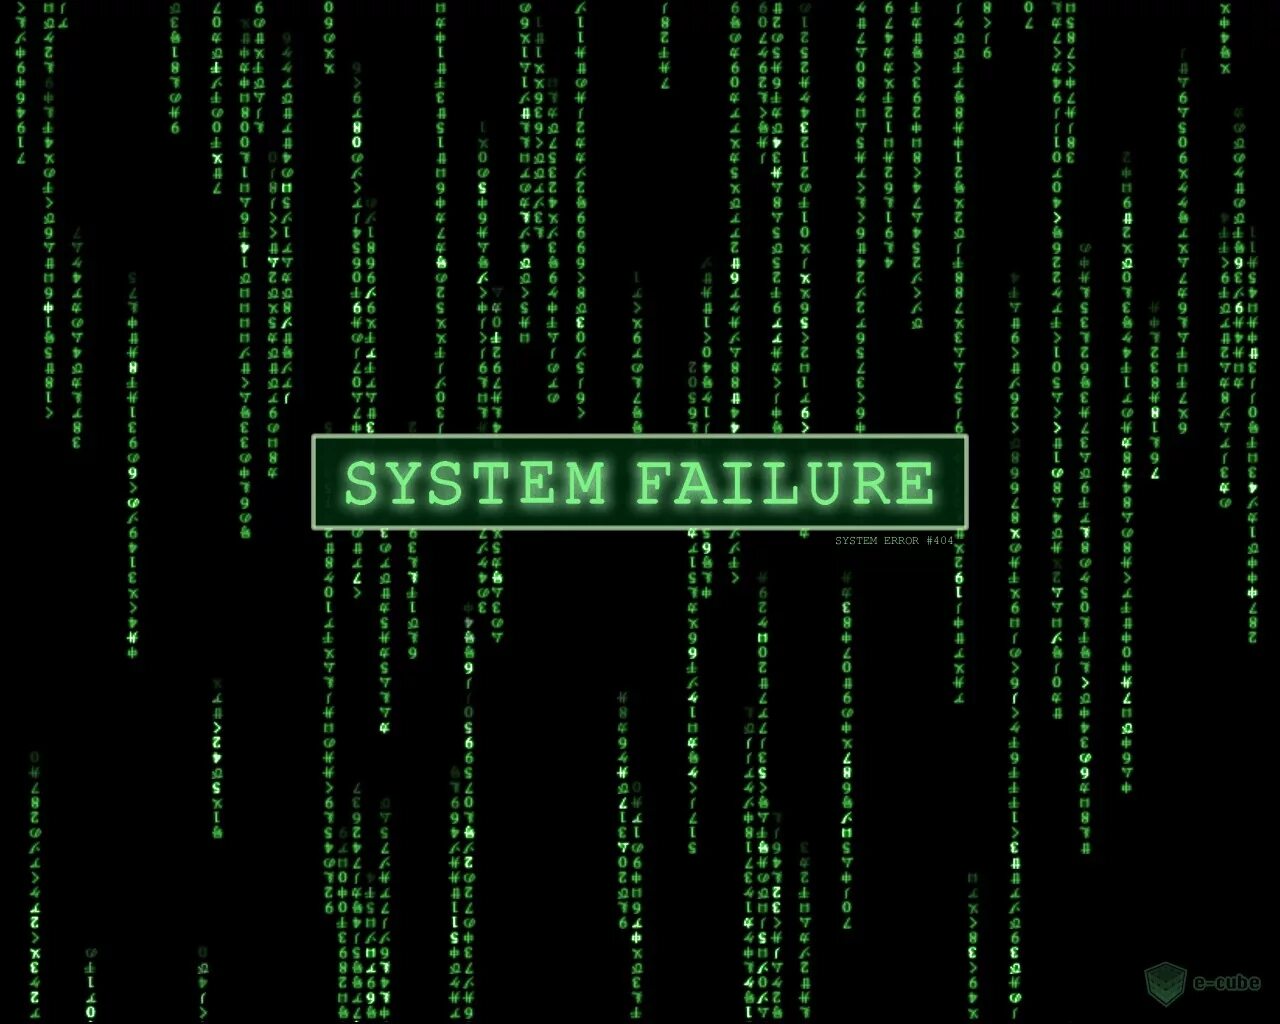 System failure. Матрица ошибок. Матрица System failure. Матрица сбой системы.